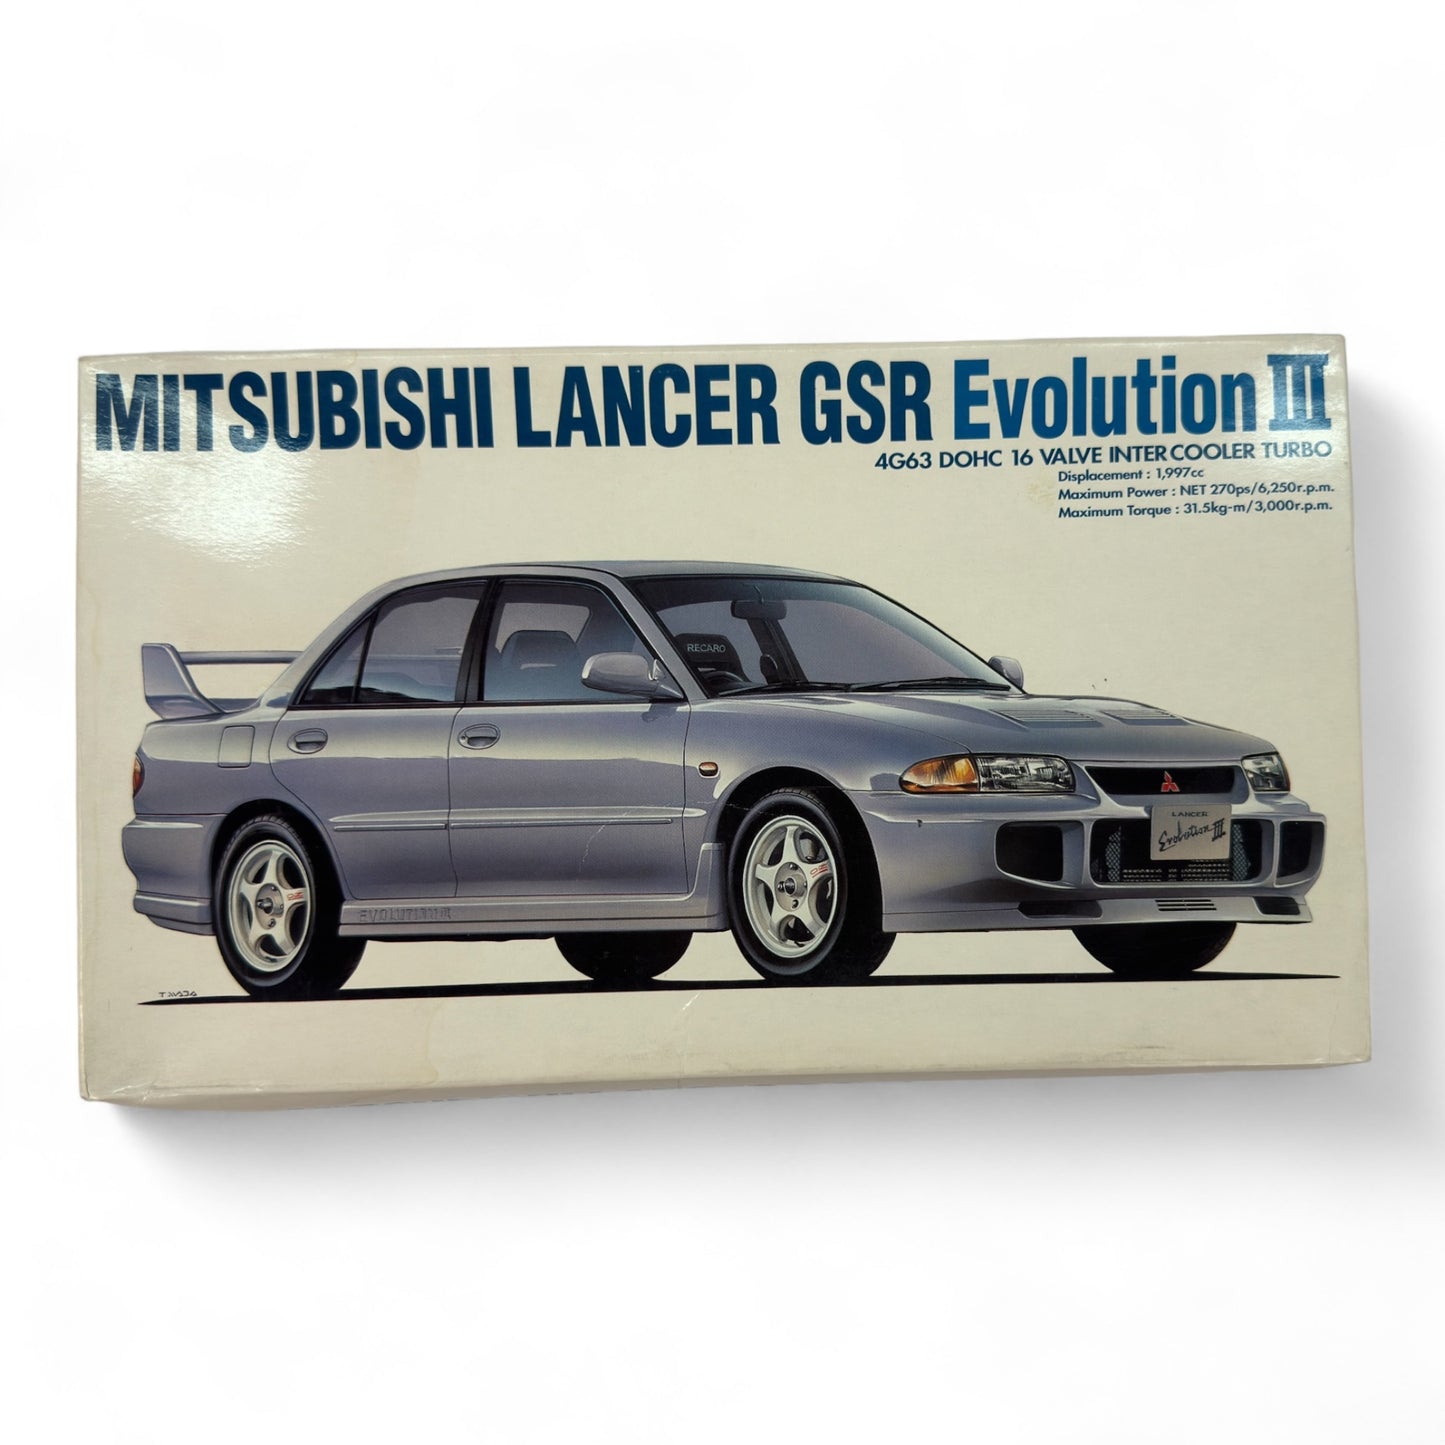 Mitsubishi Lancer GSR Evolution III 1/24 - Hasegawa